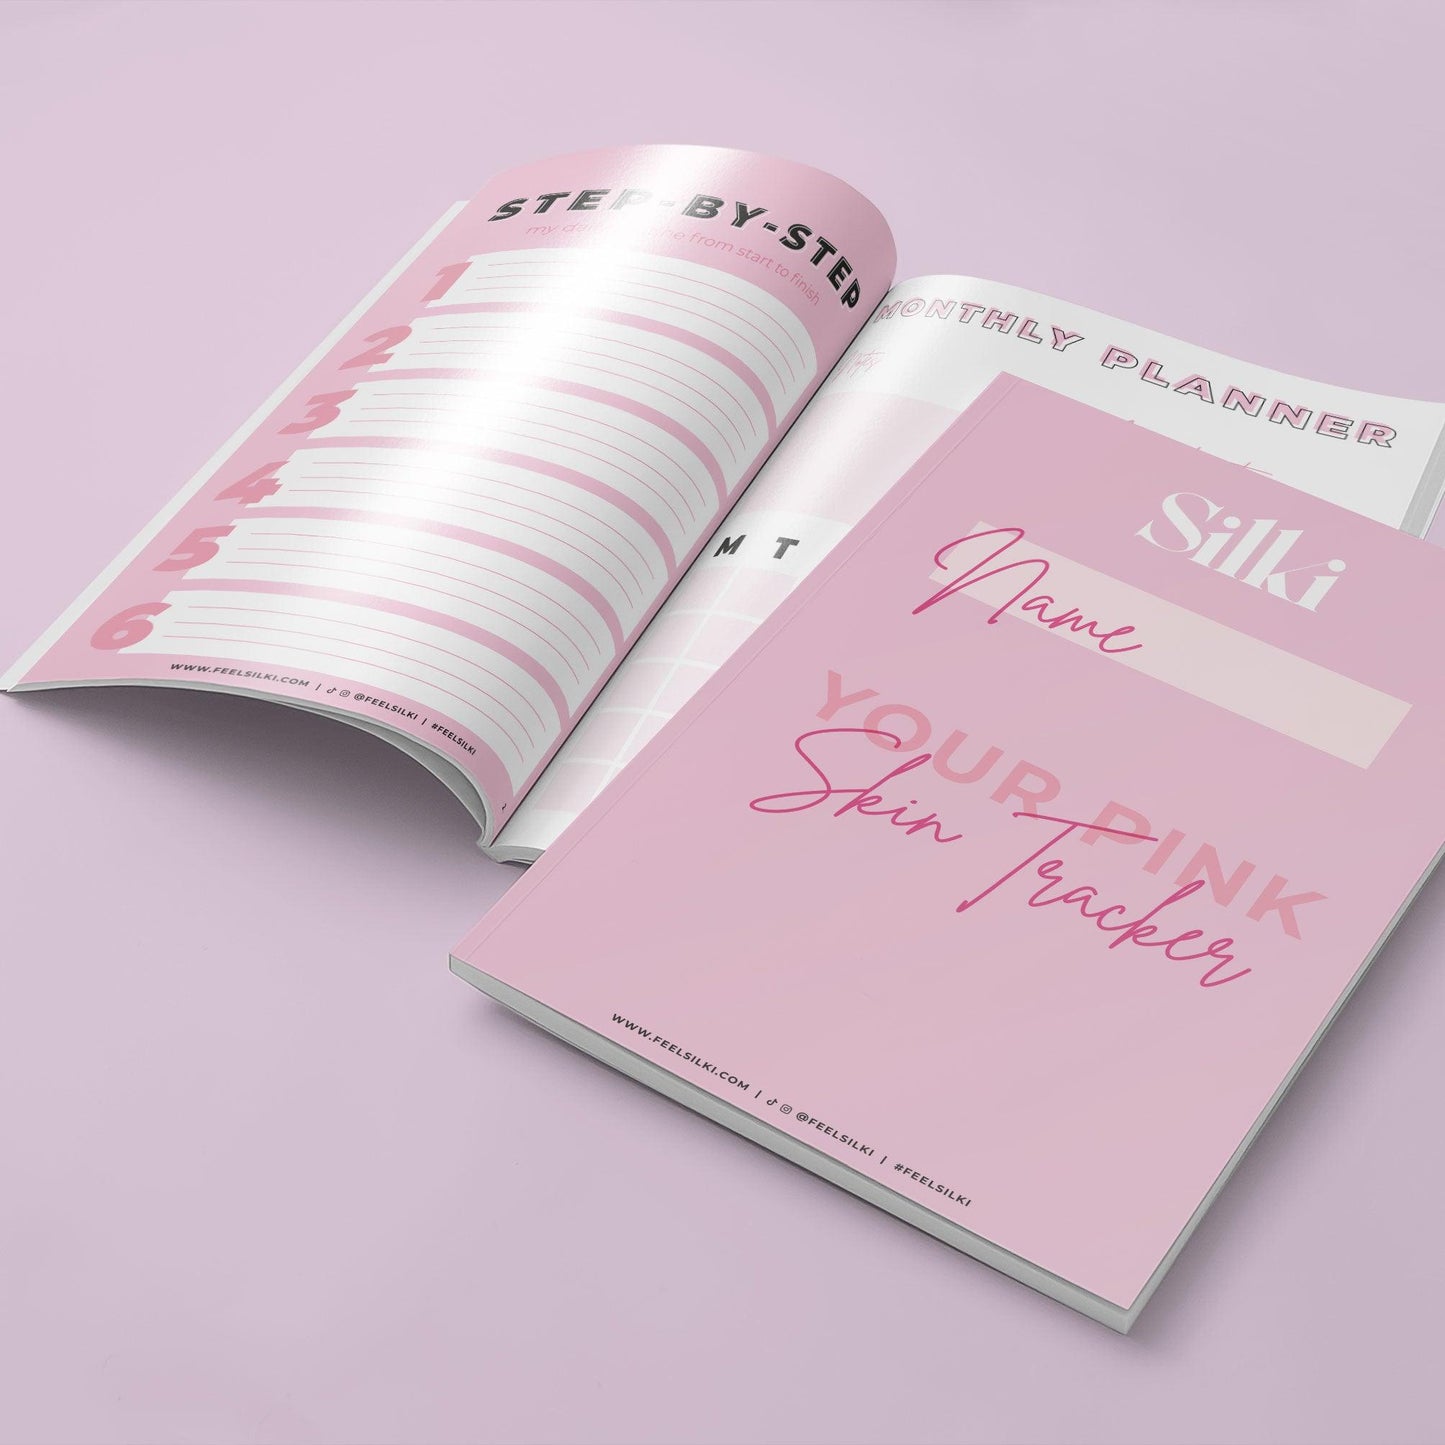 Your Pink Skin Tracker - Free Digital Download - Silki